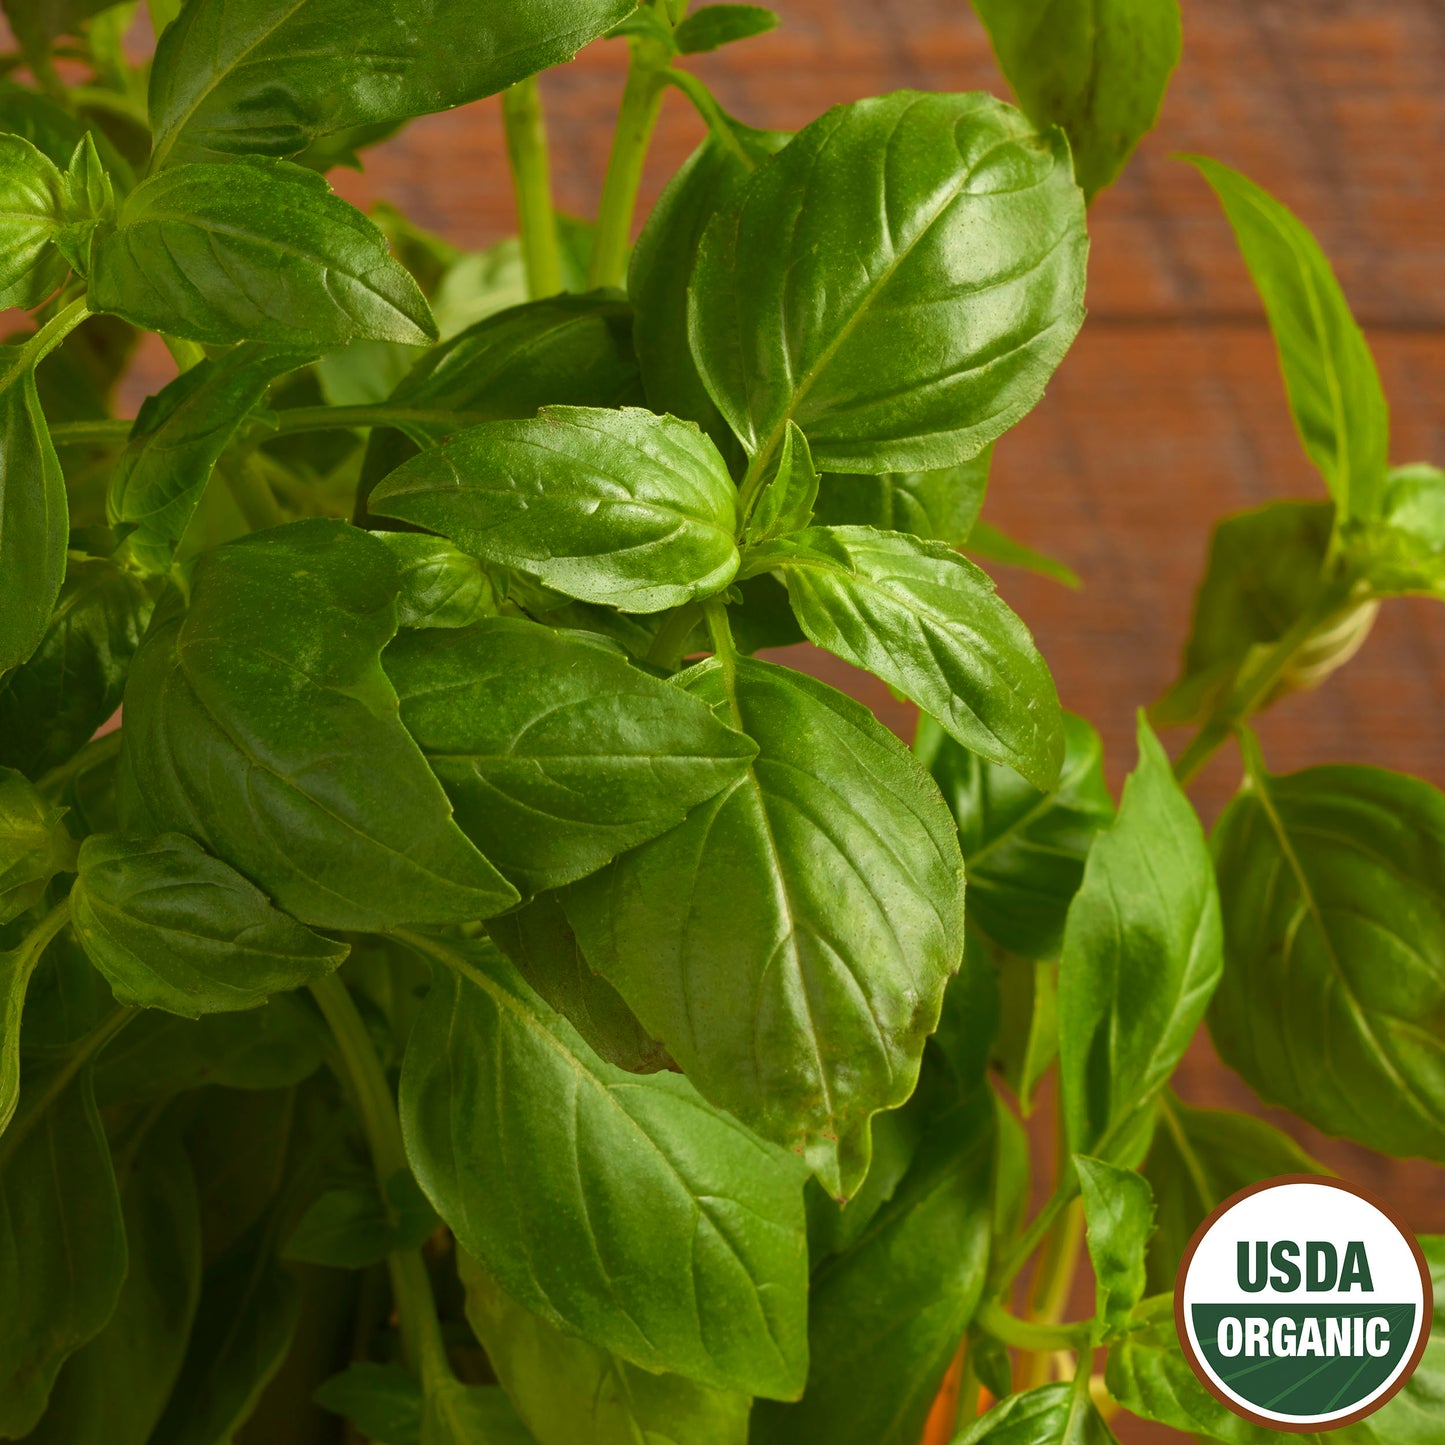 USDA Organic Genovese Basil Herb seeds_Closeup of large, healthy green Genovese basil leaves.